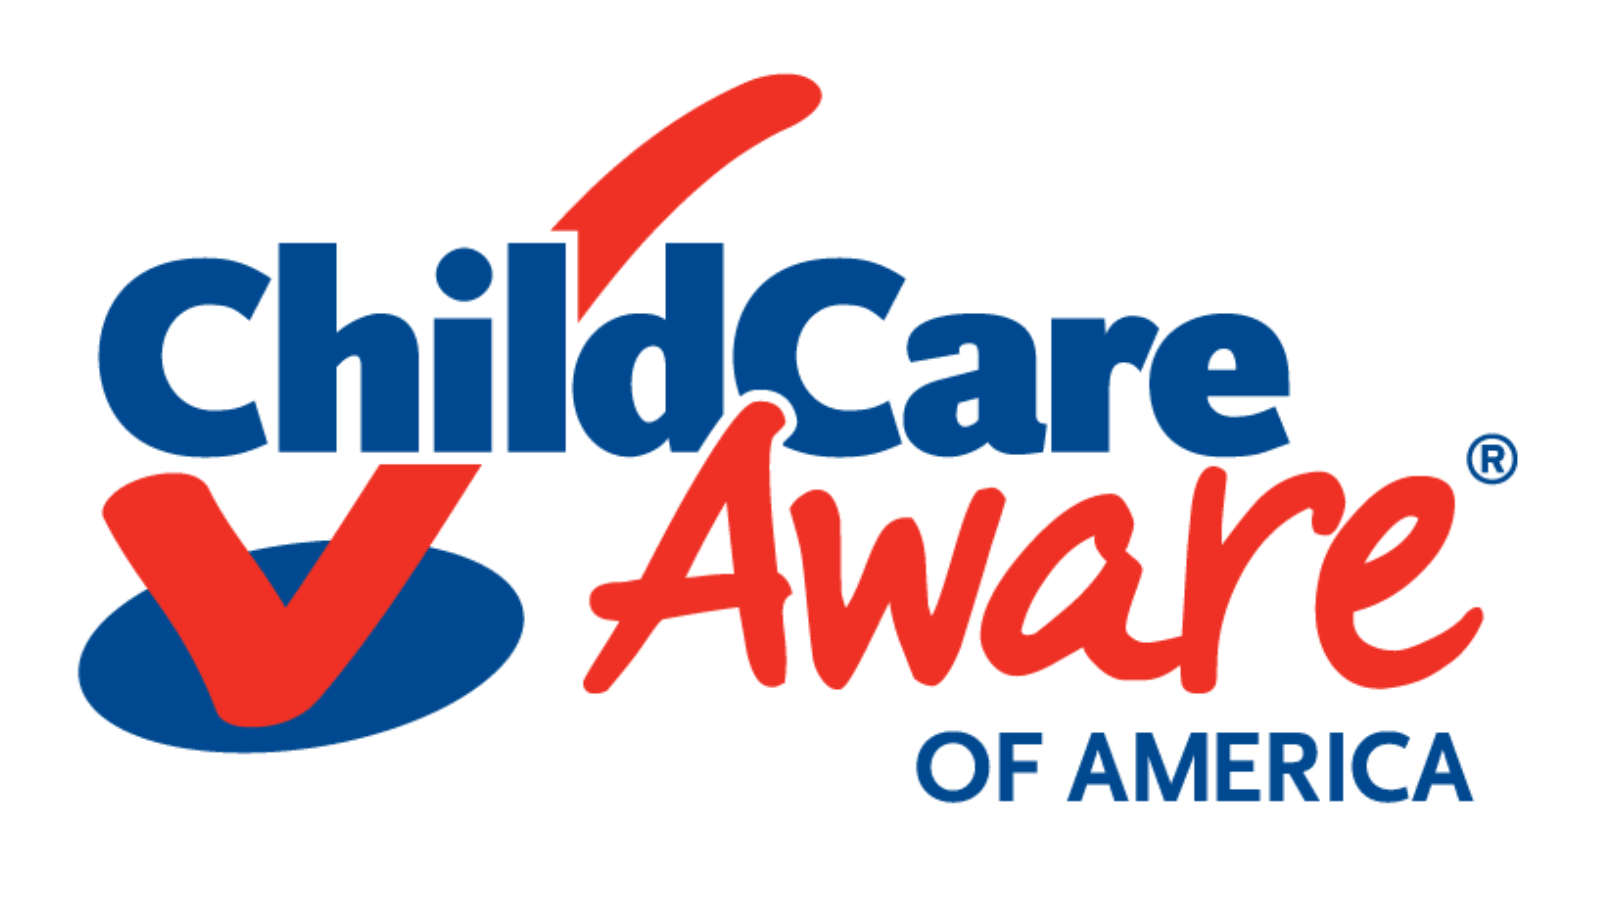 Child Care Aware of America logo